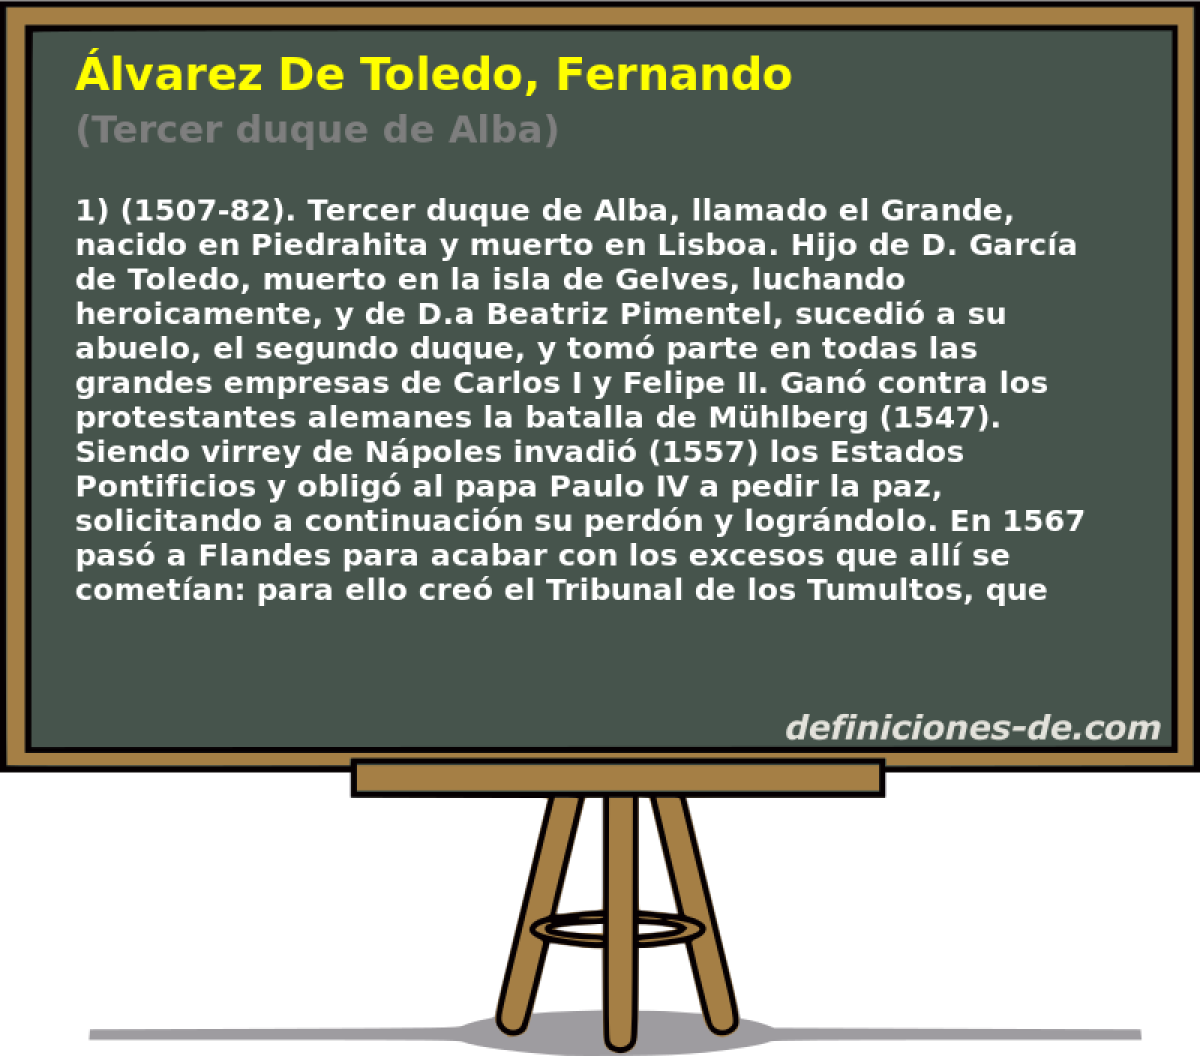 lvarez De Toledo, Fernando (Tercer duque de Alba)